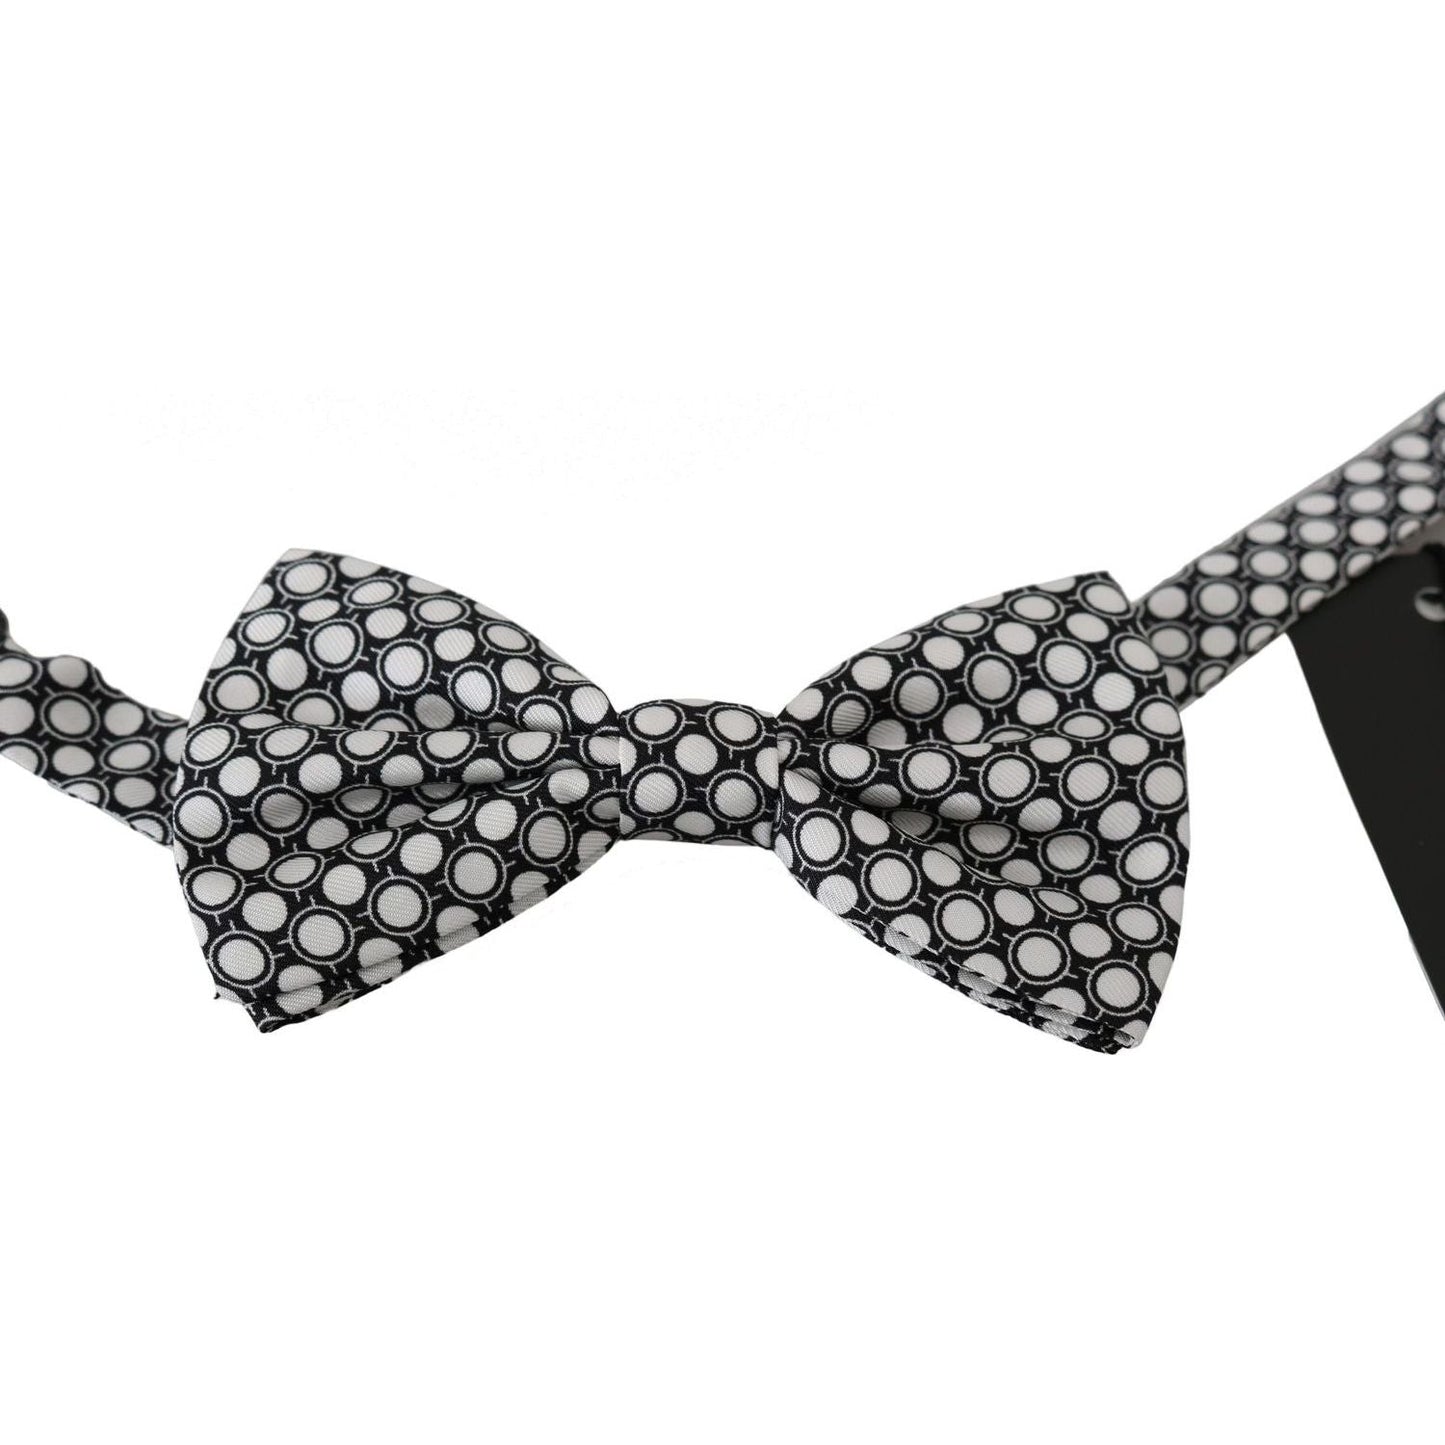 Dolce & Gabbana Elegant Black White Circle Silk Bow Tie men-black-white-circles-adjustable-neck-papillon-bow-tie Bow Tie IMG_3704-scaled-5236155c-da5.jpg